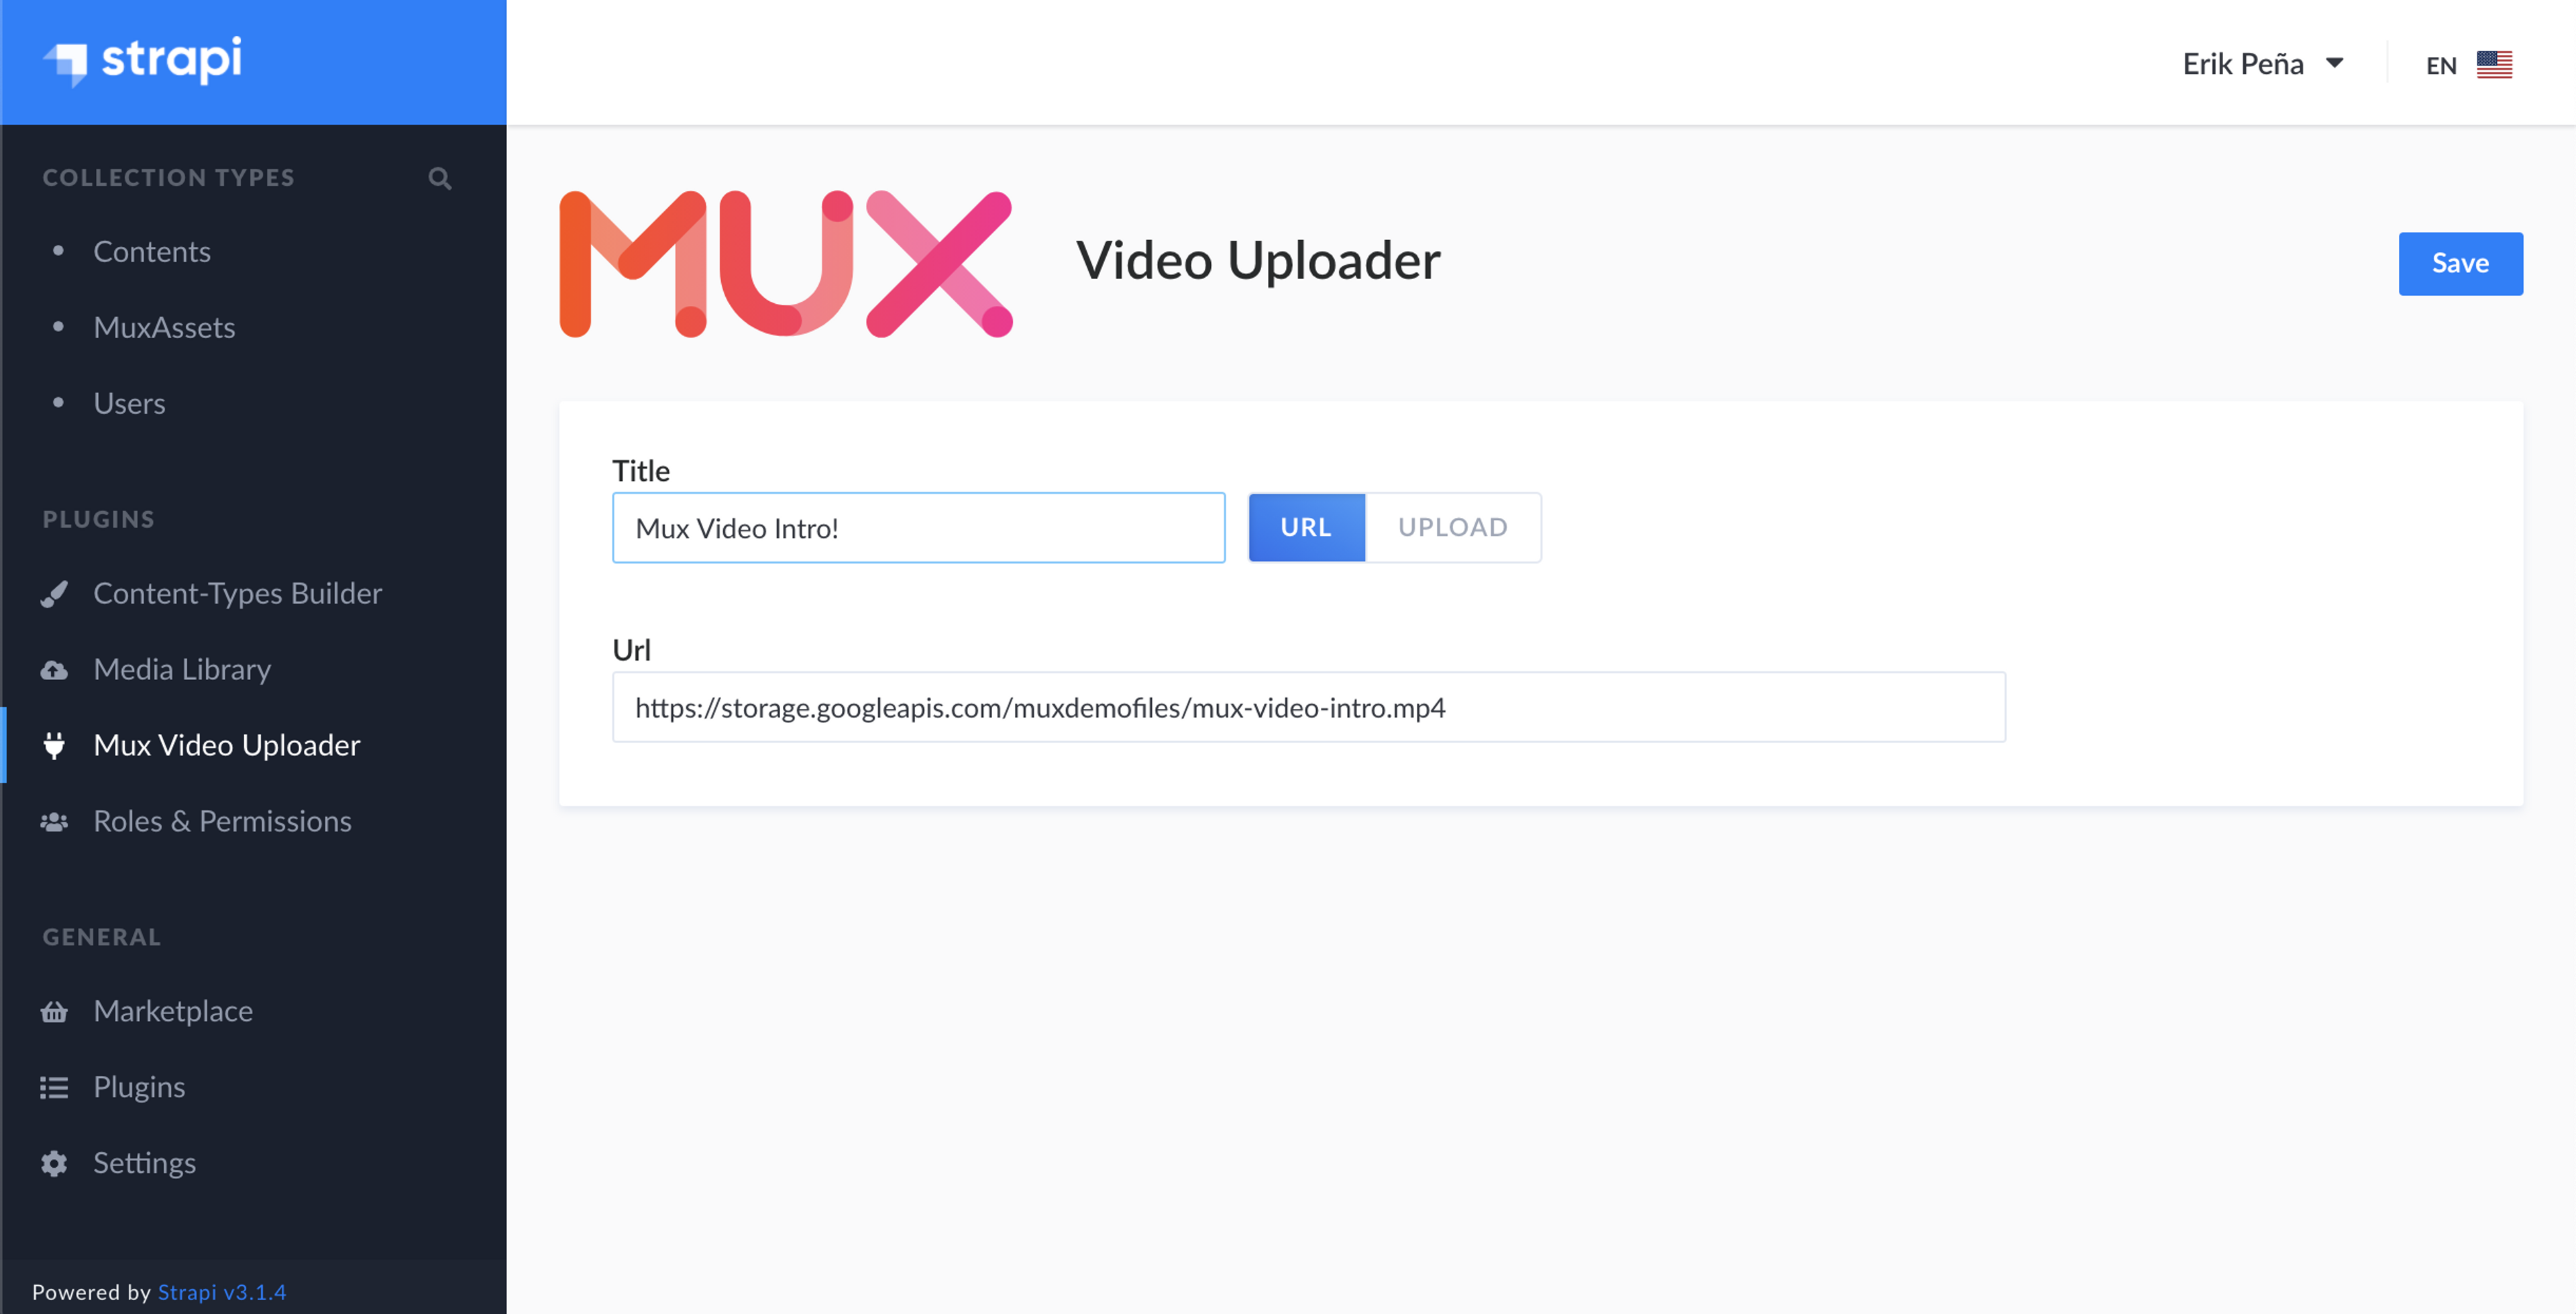 Mux Video Uploader - Remote Url Upload